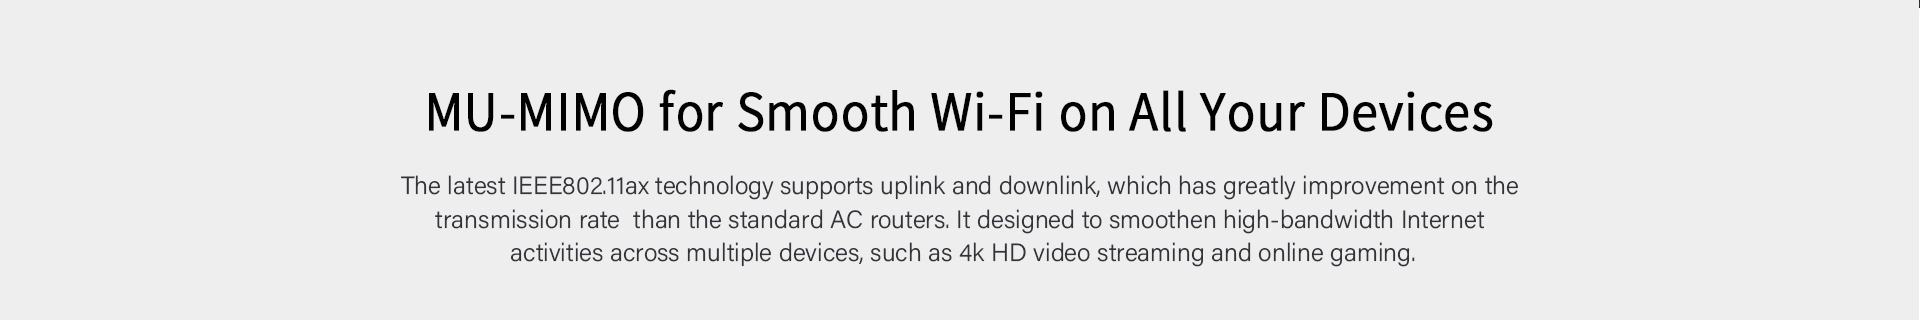 MU-MIMO for smooth Wi-Fi 